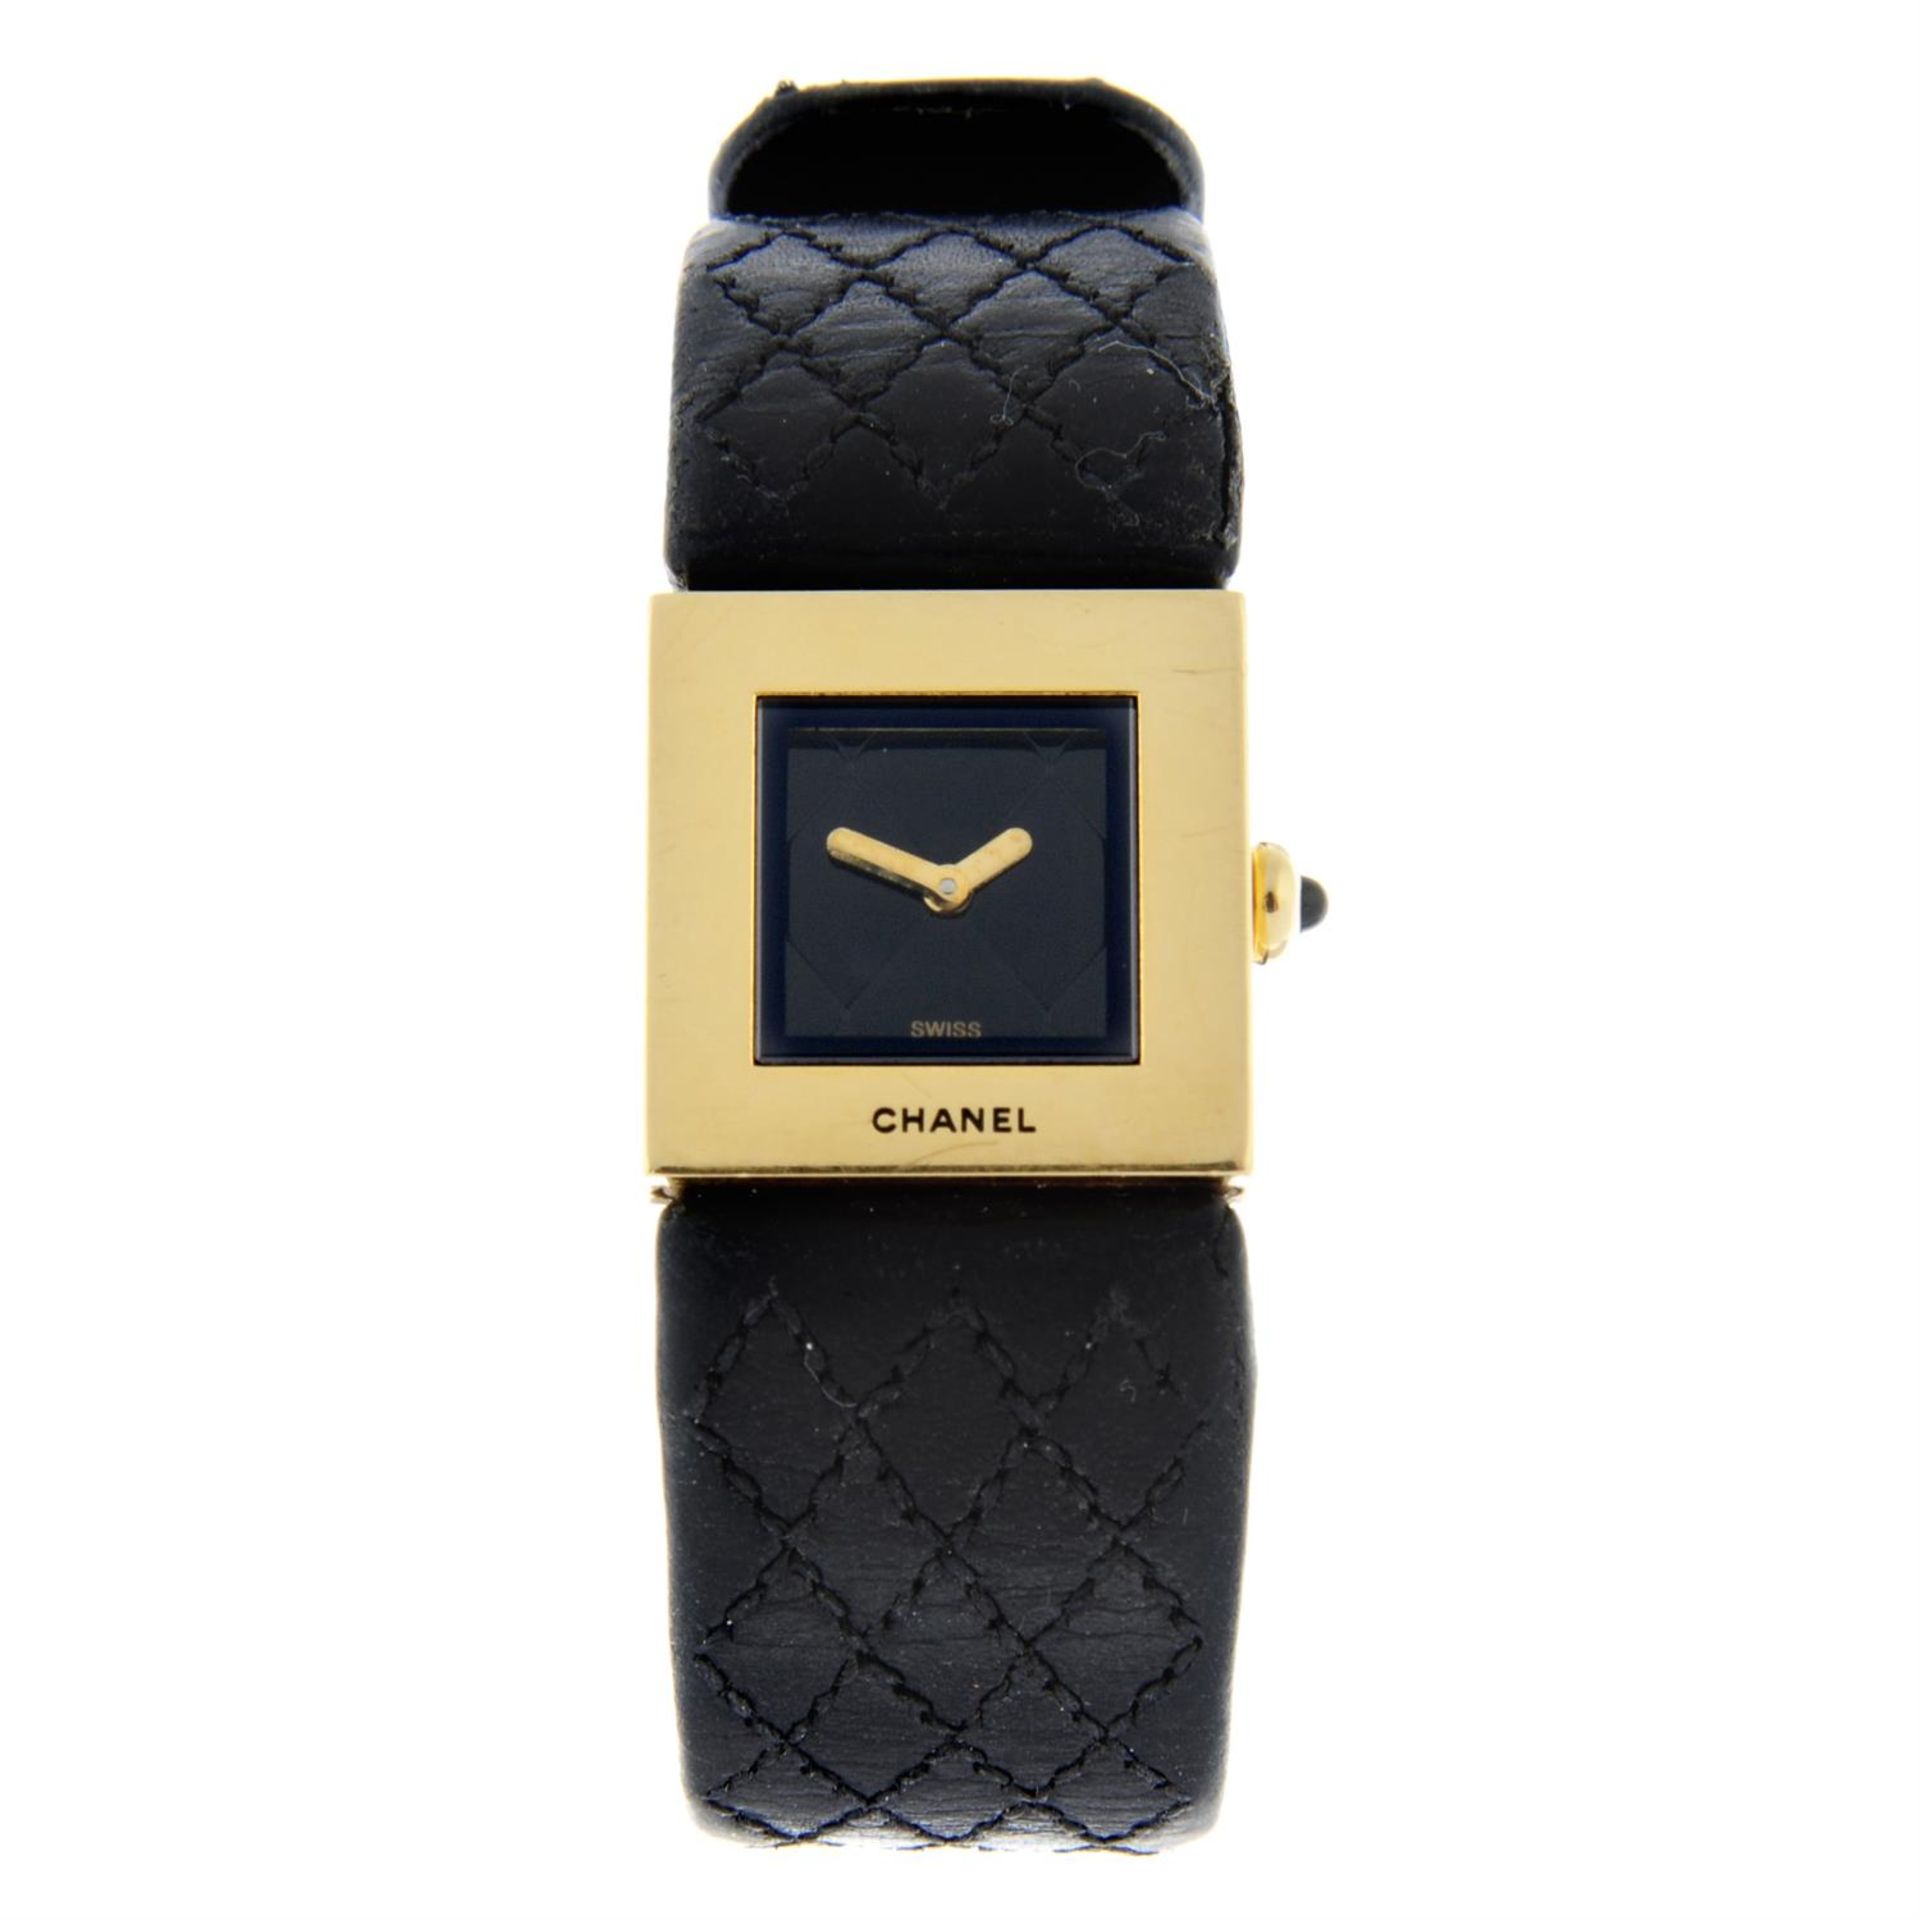 CHANEL - an 18ct yellow gold wrist watch, 19mm.